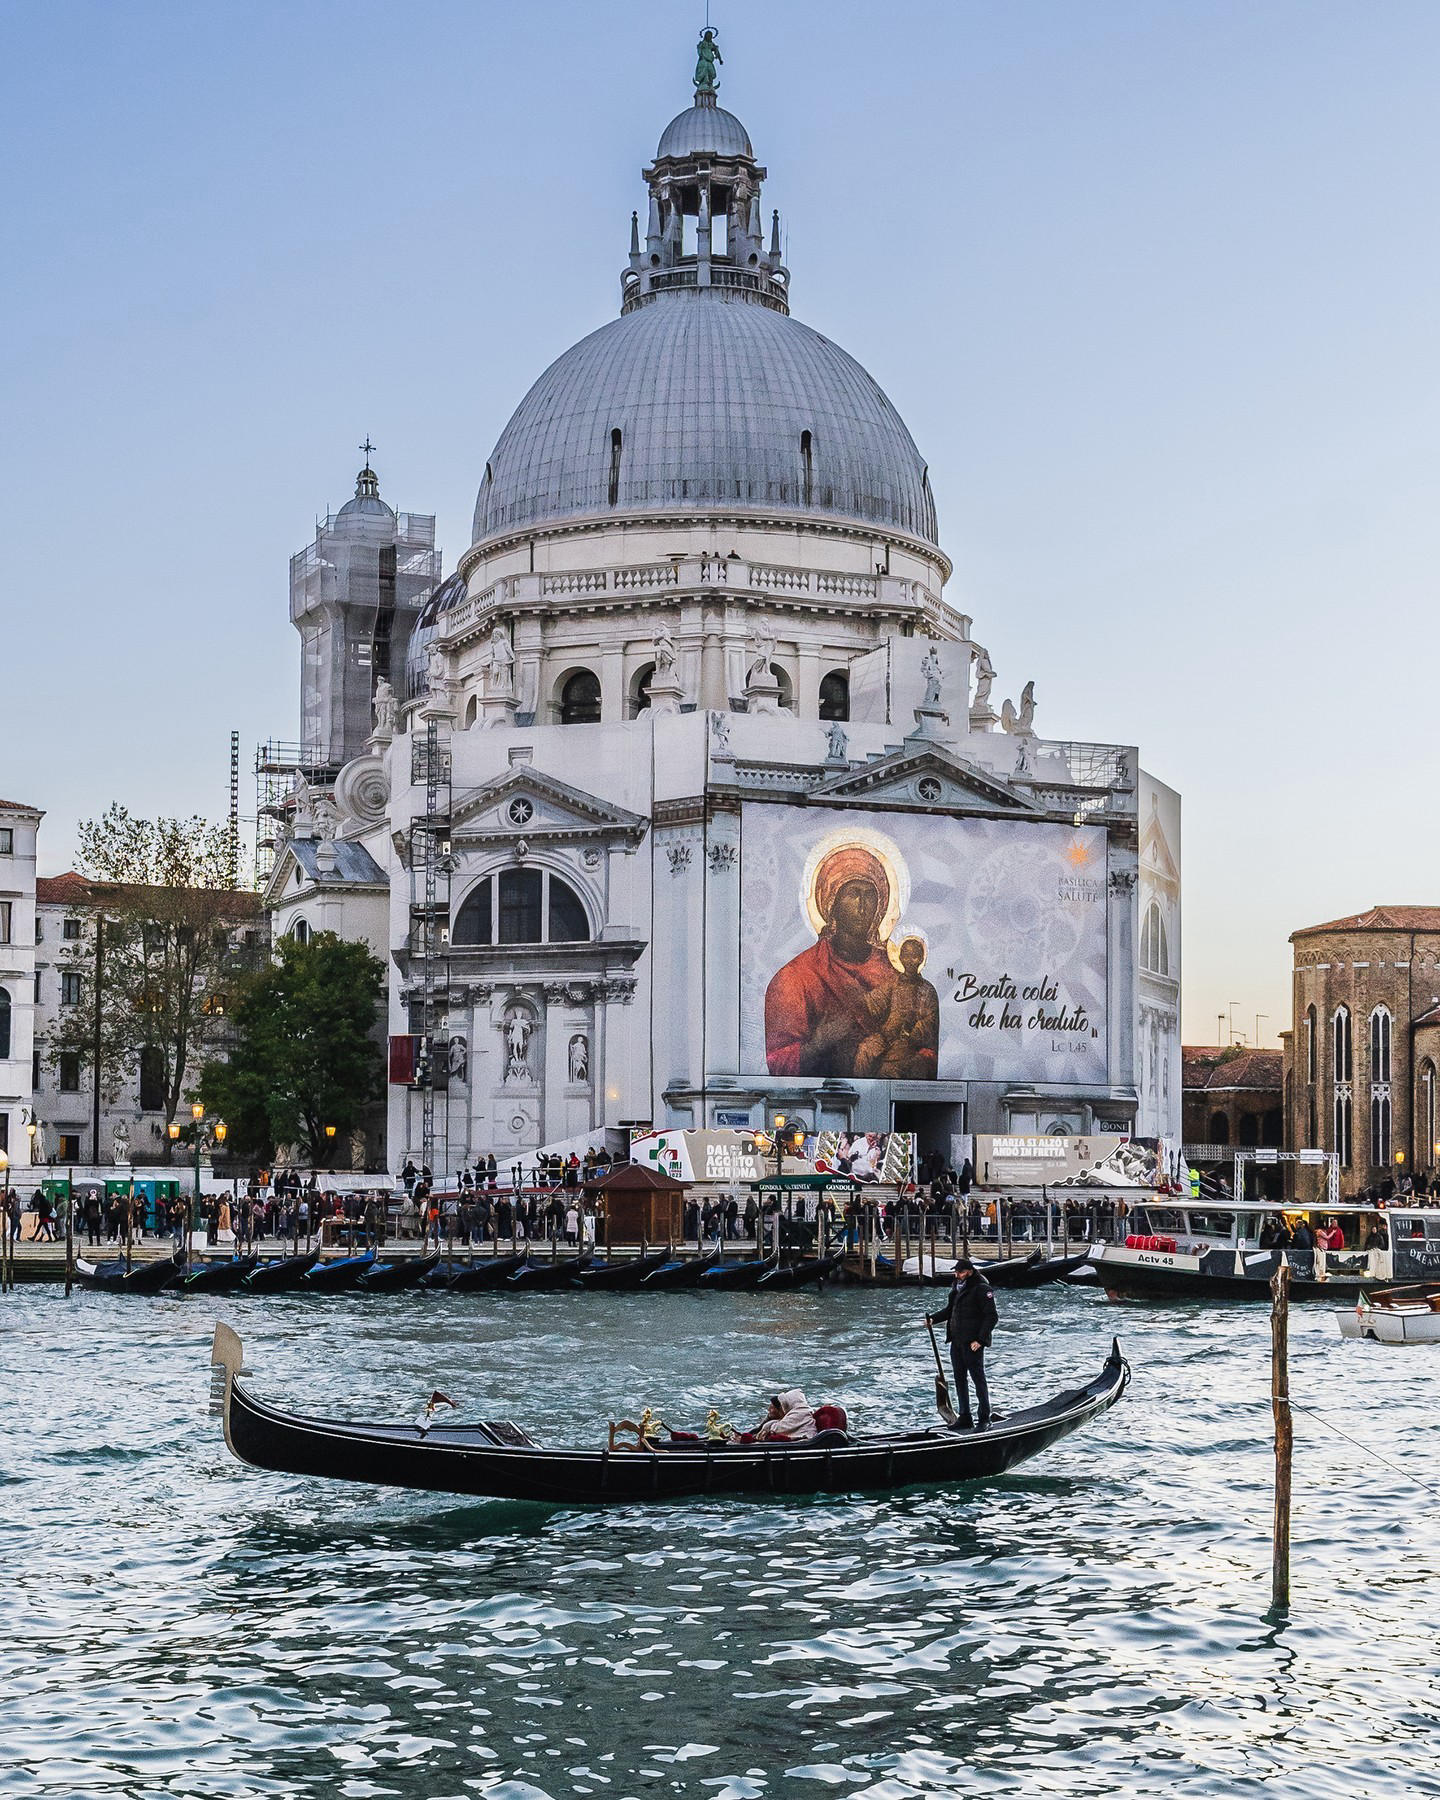 image  1 Hotel Excelsior Venice - On 21st November, the Madonna della Salute is celebrated in Venice